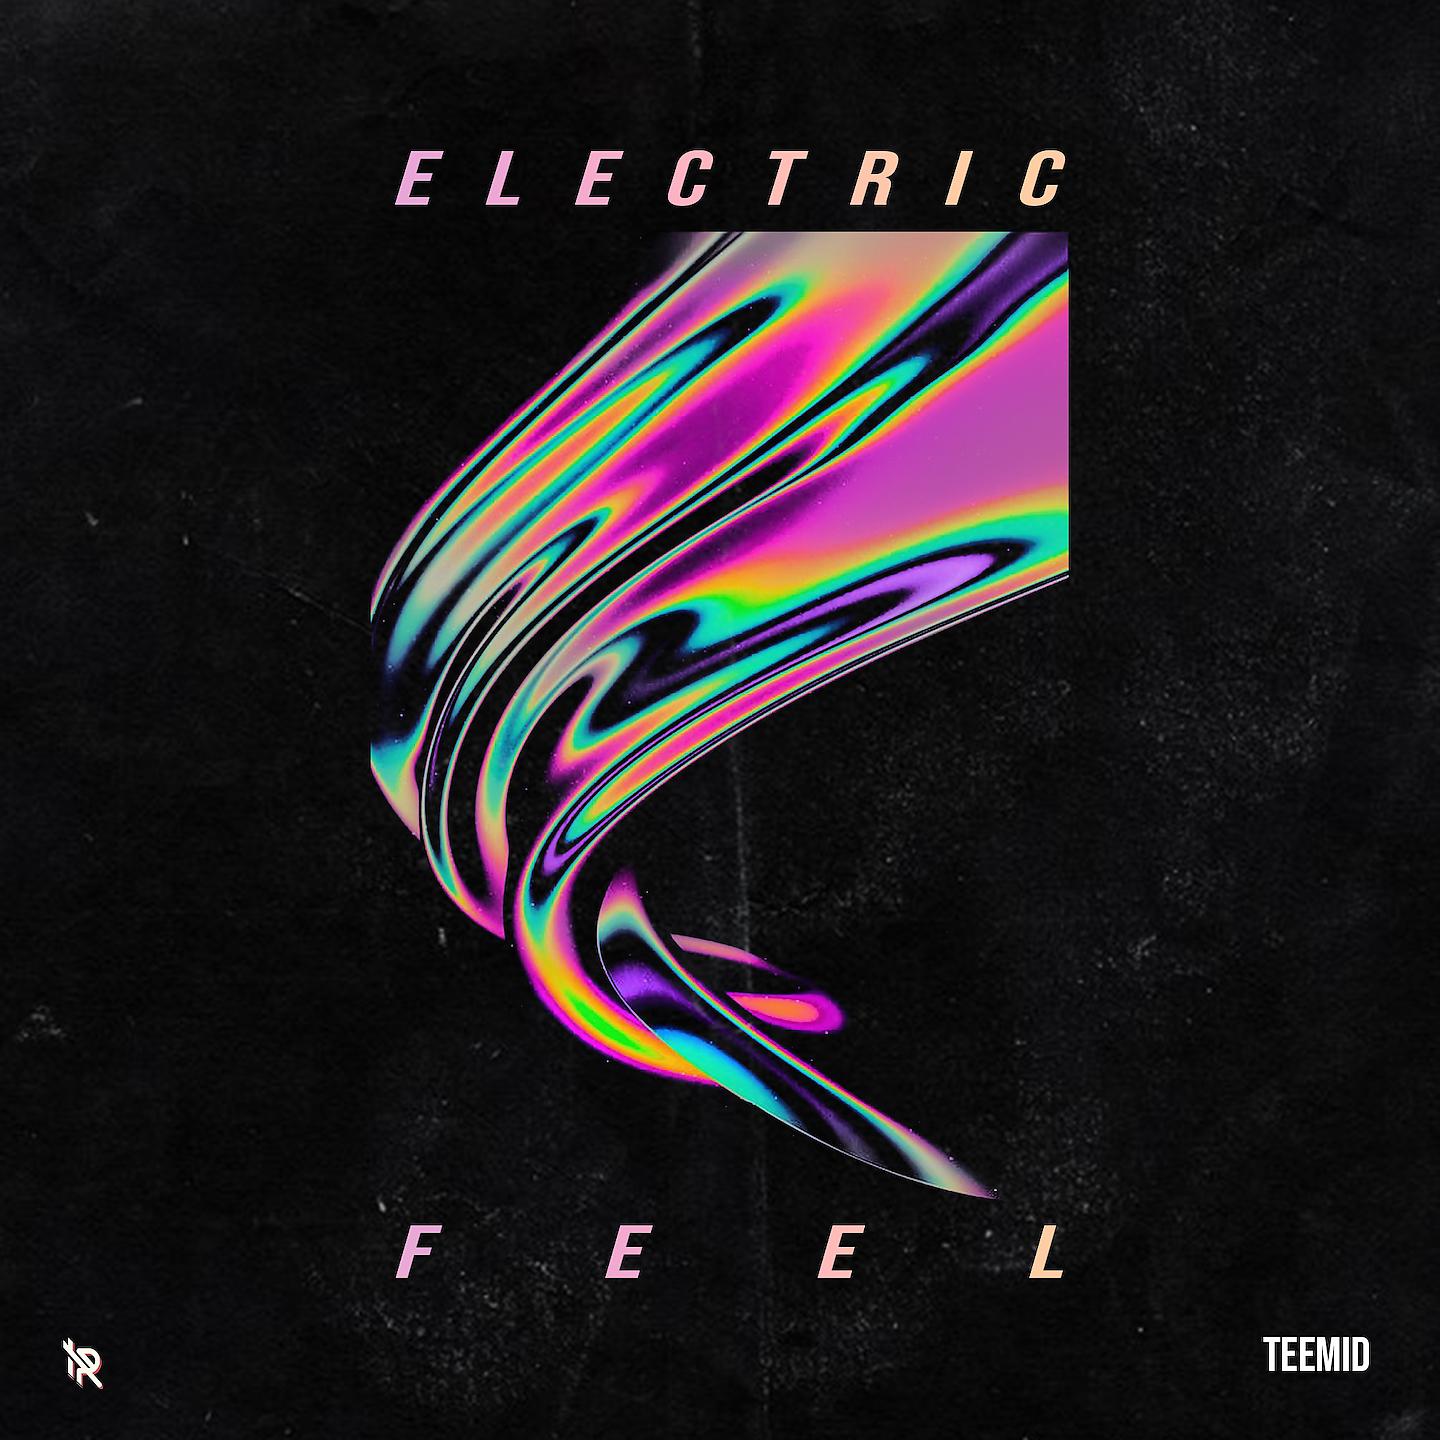 Feeling electric. Electric feel TEEMID. Альбомы электро. Альбом Electric Touch. TEEMID - Wonderwall.